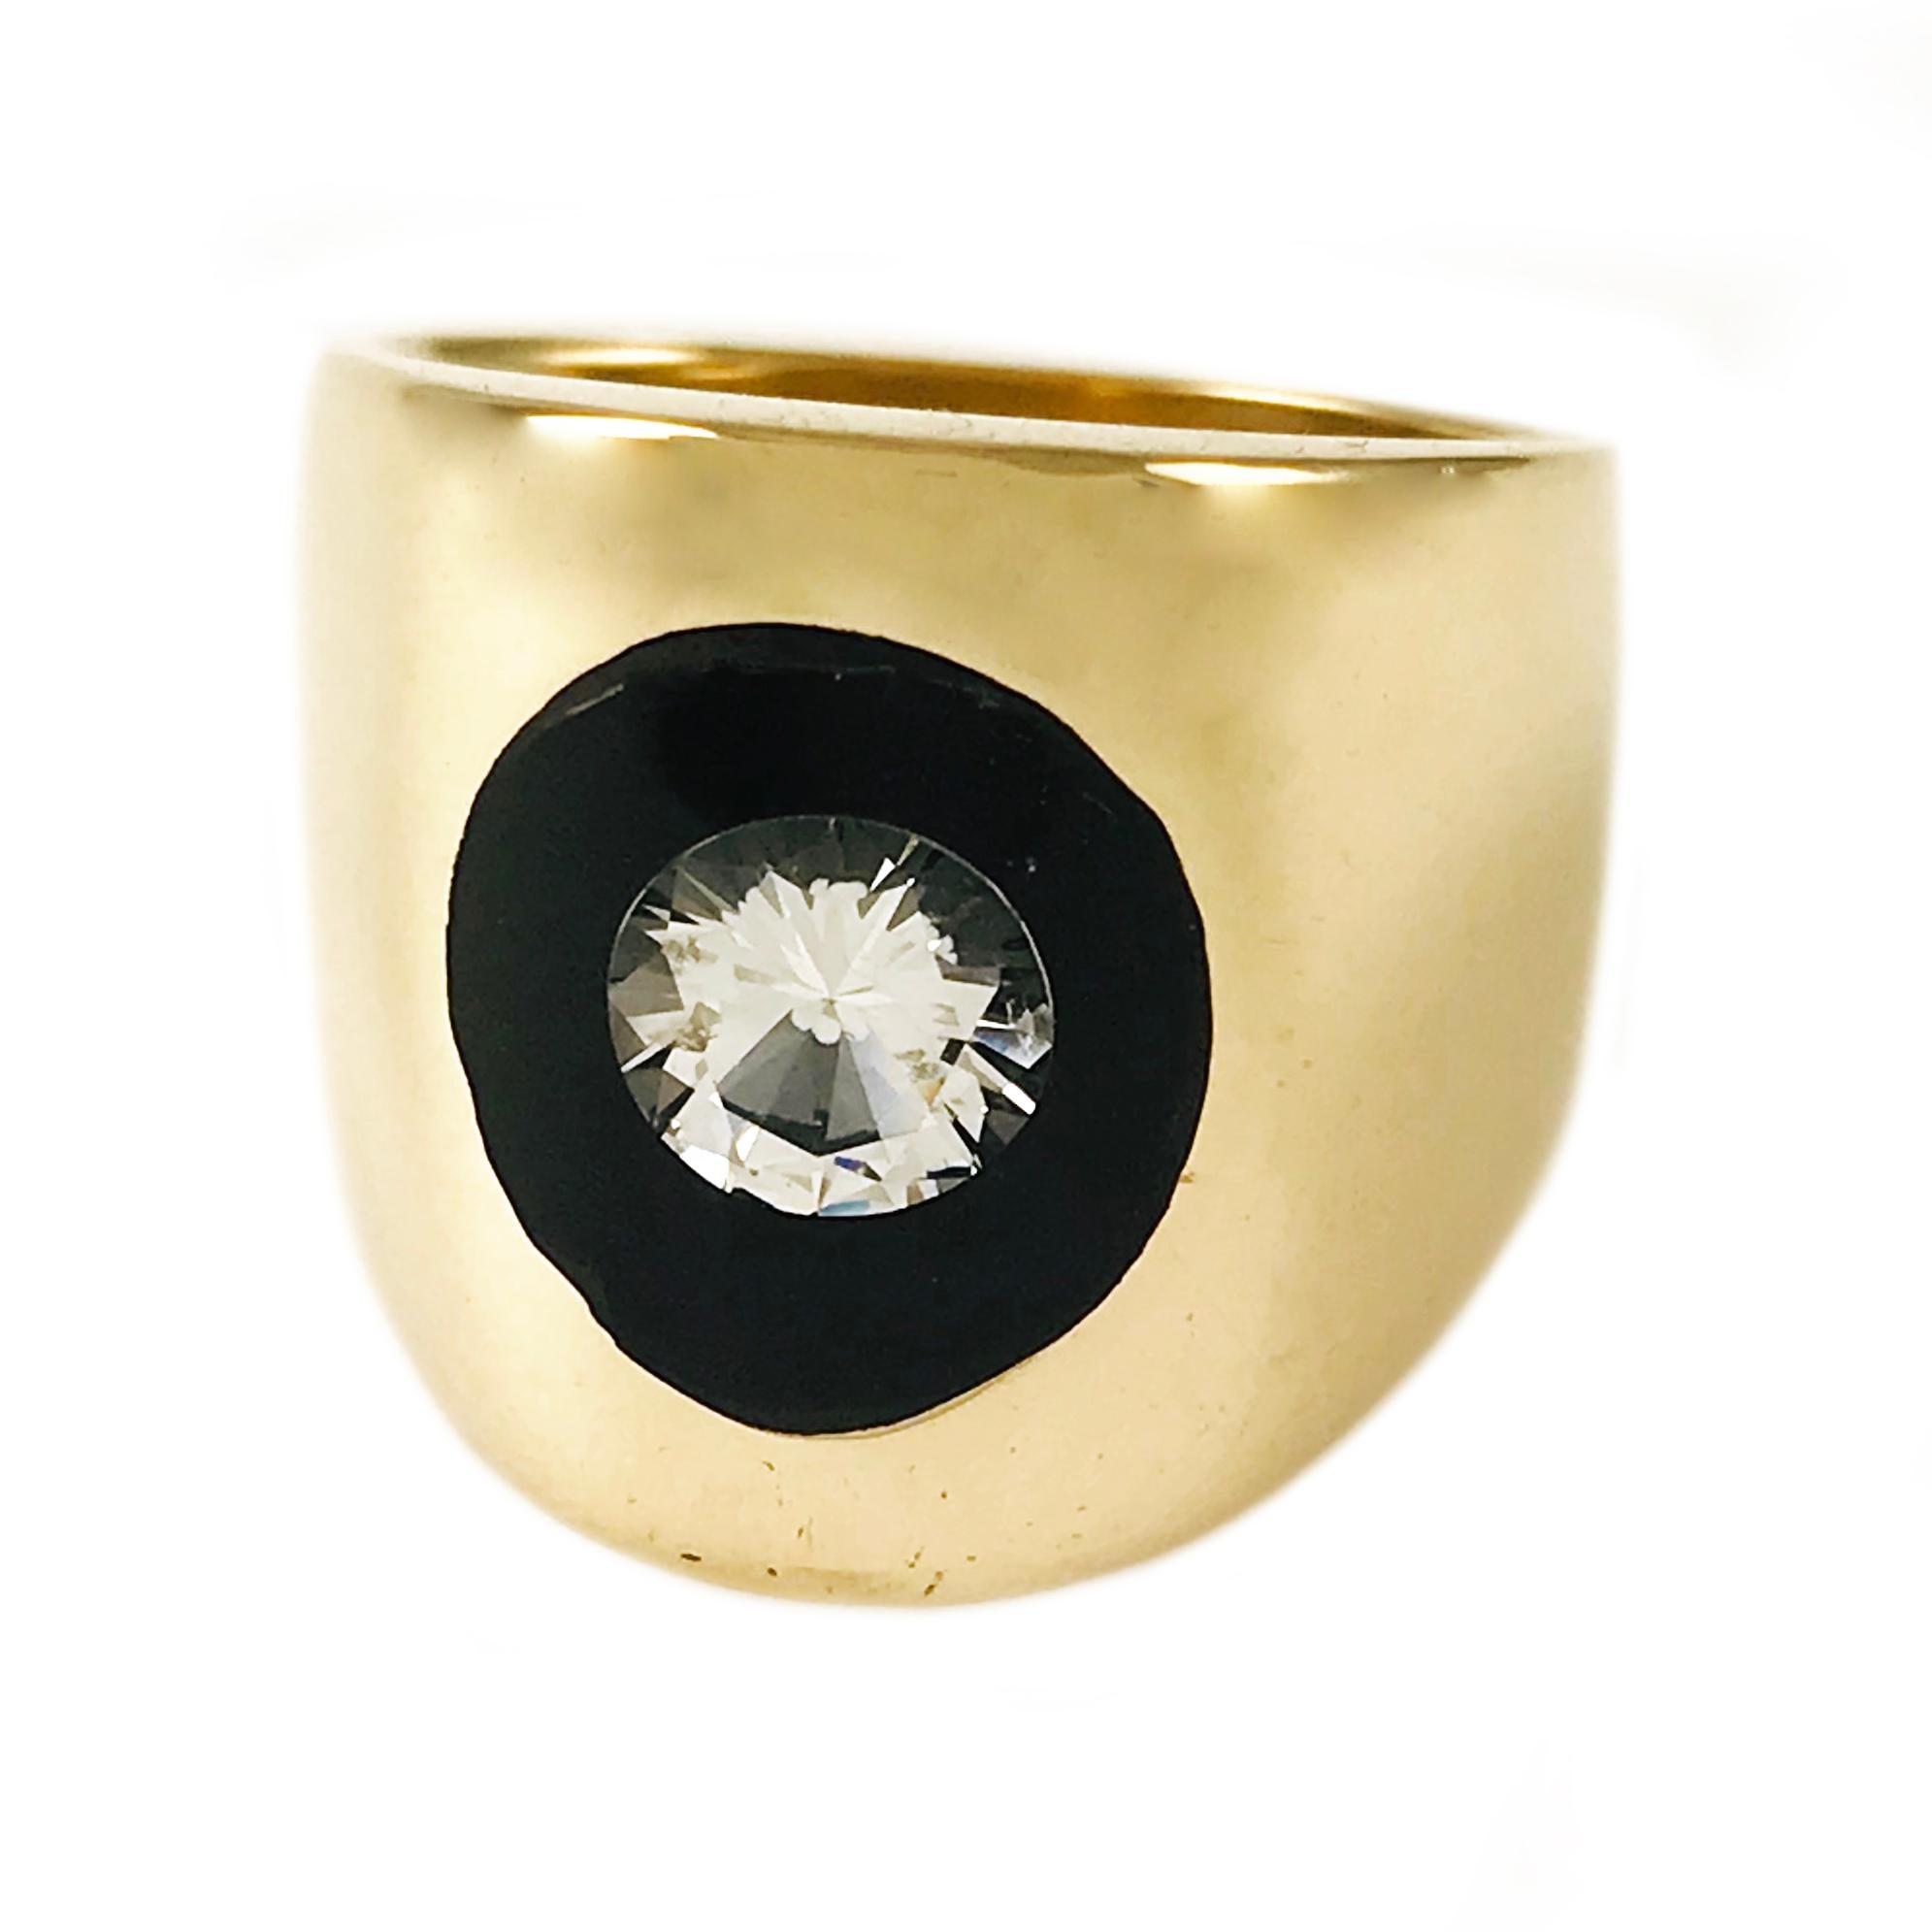 Incogem Floating Diamond Lucite Ring - 0.50 Carat Size 9.5 For Sale